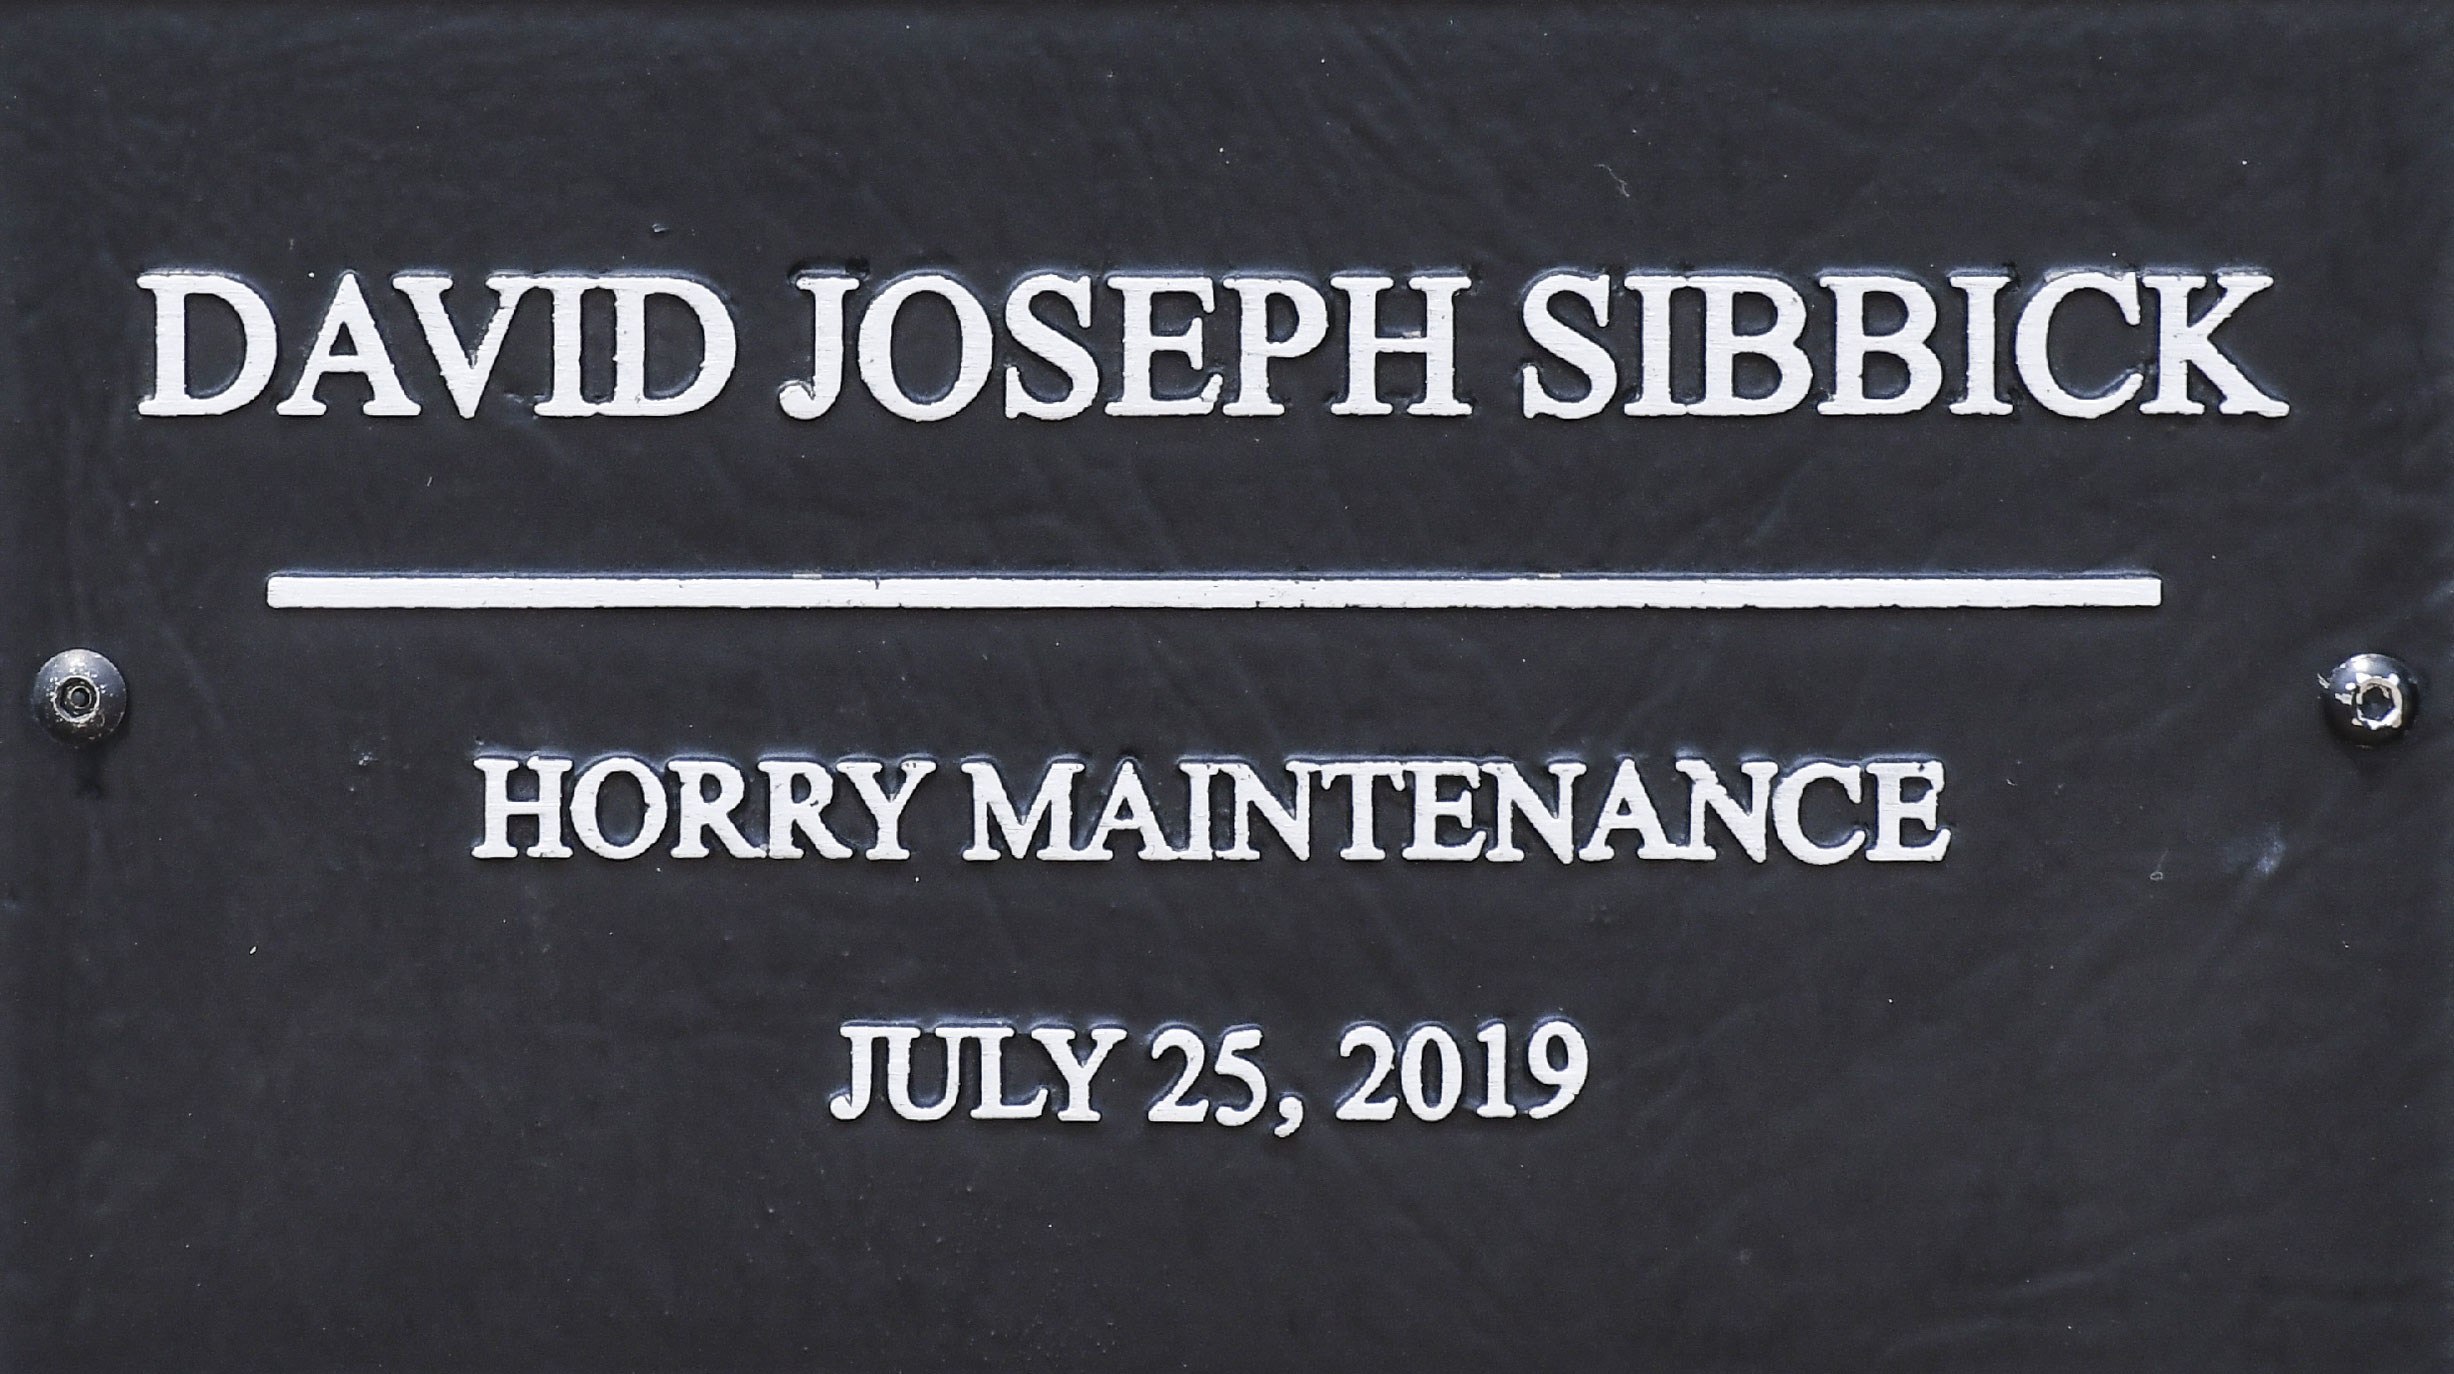 SCDOT Worker David Joseph Sibbick - Horry Maintenance - July 25, 2019 